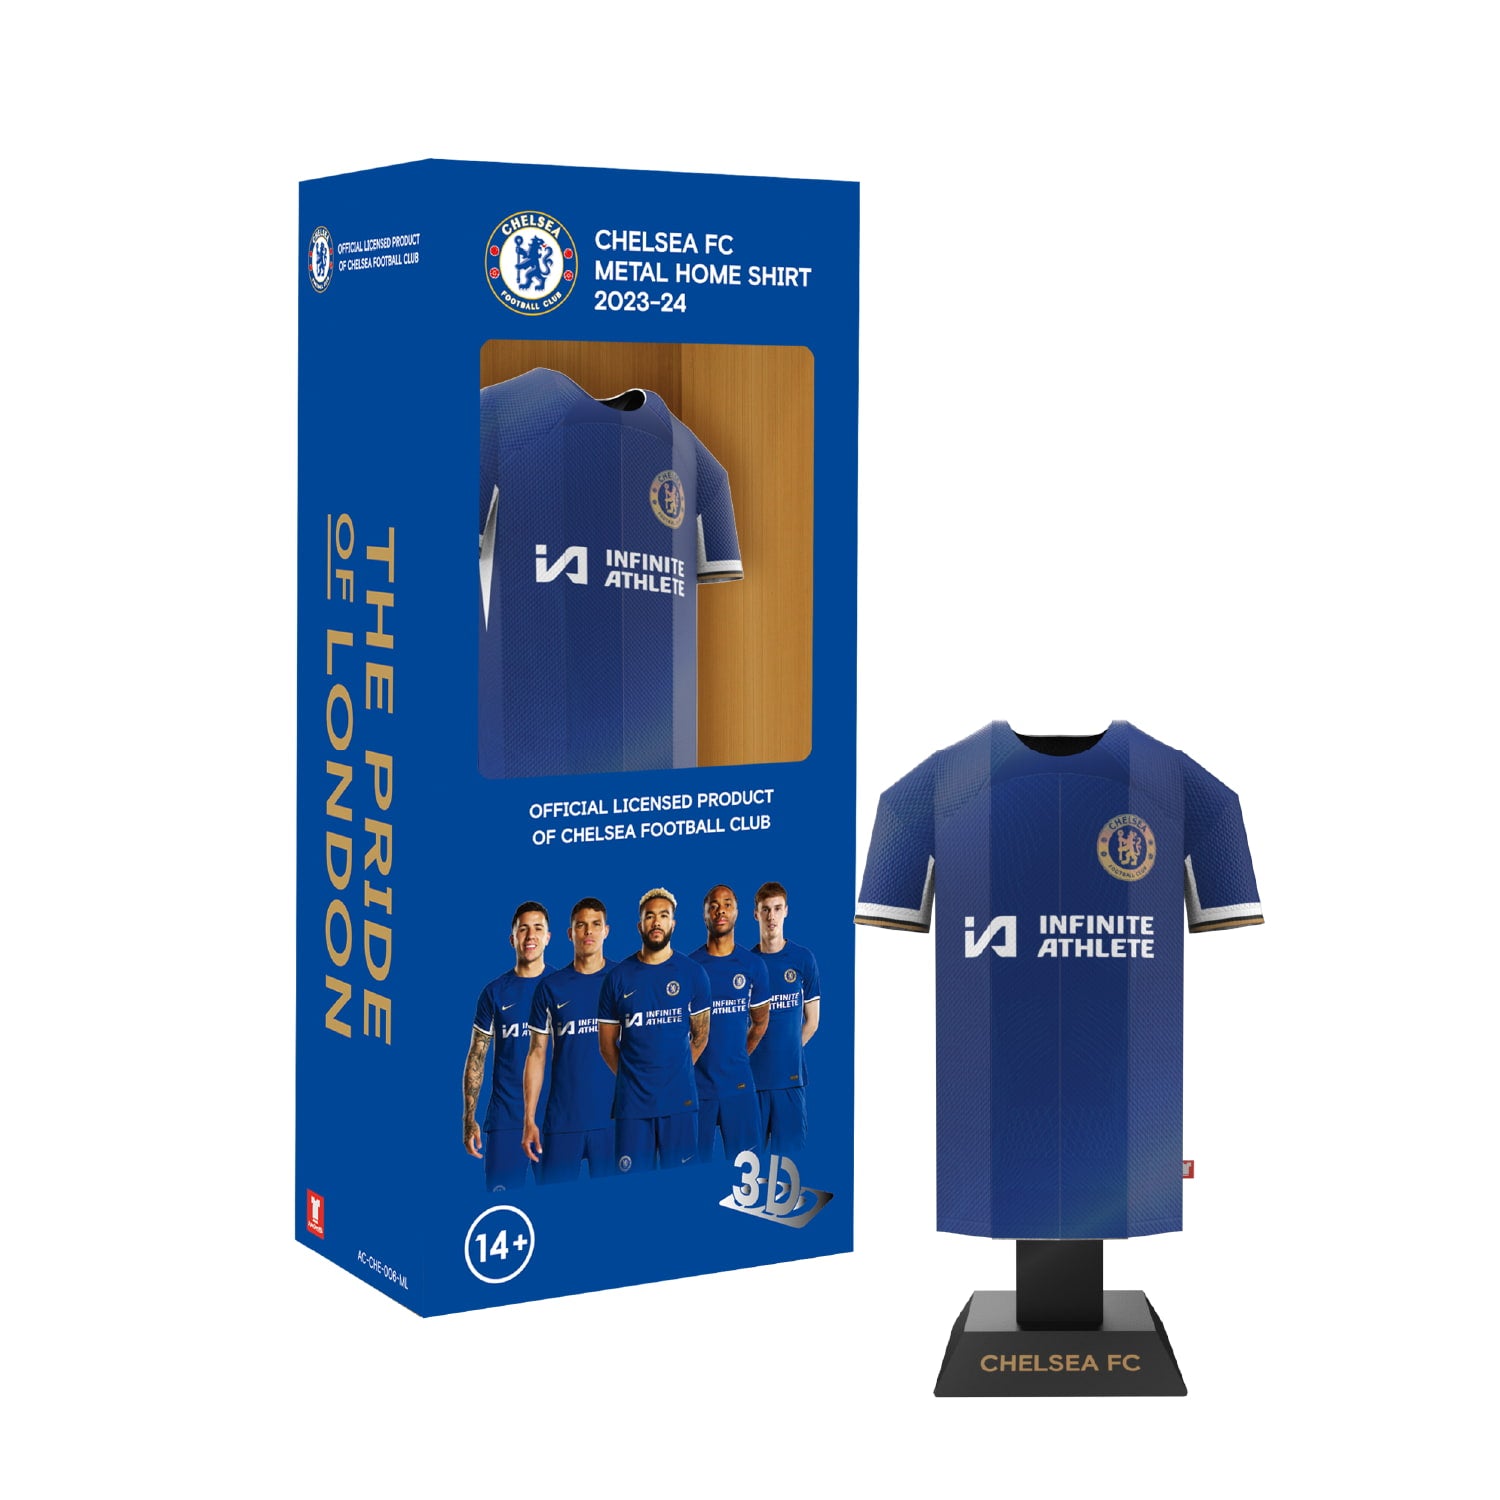 Chelsea home kit with locker packaging